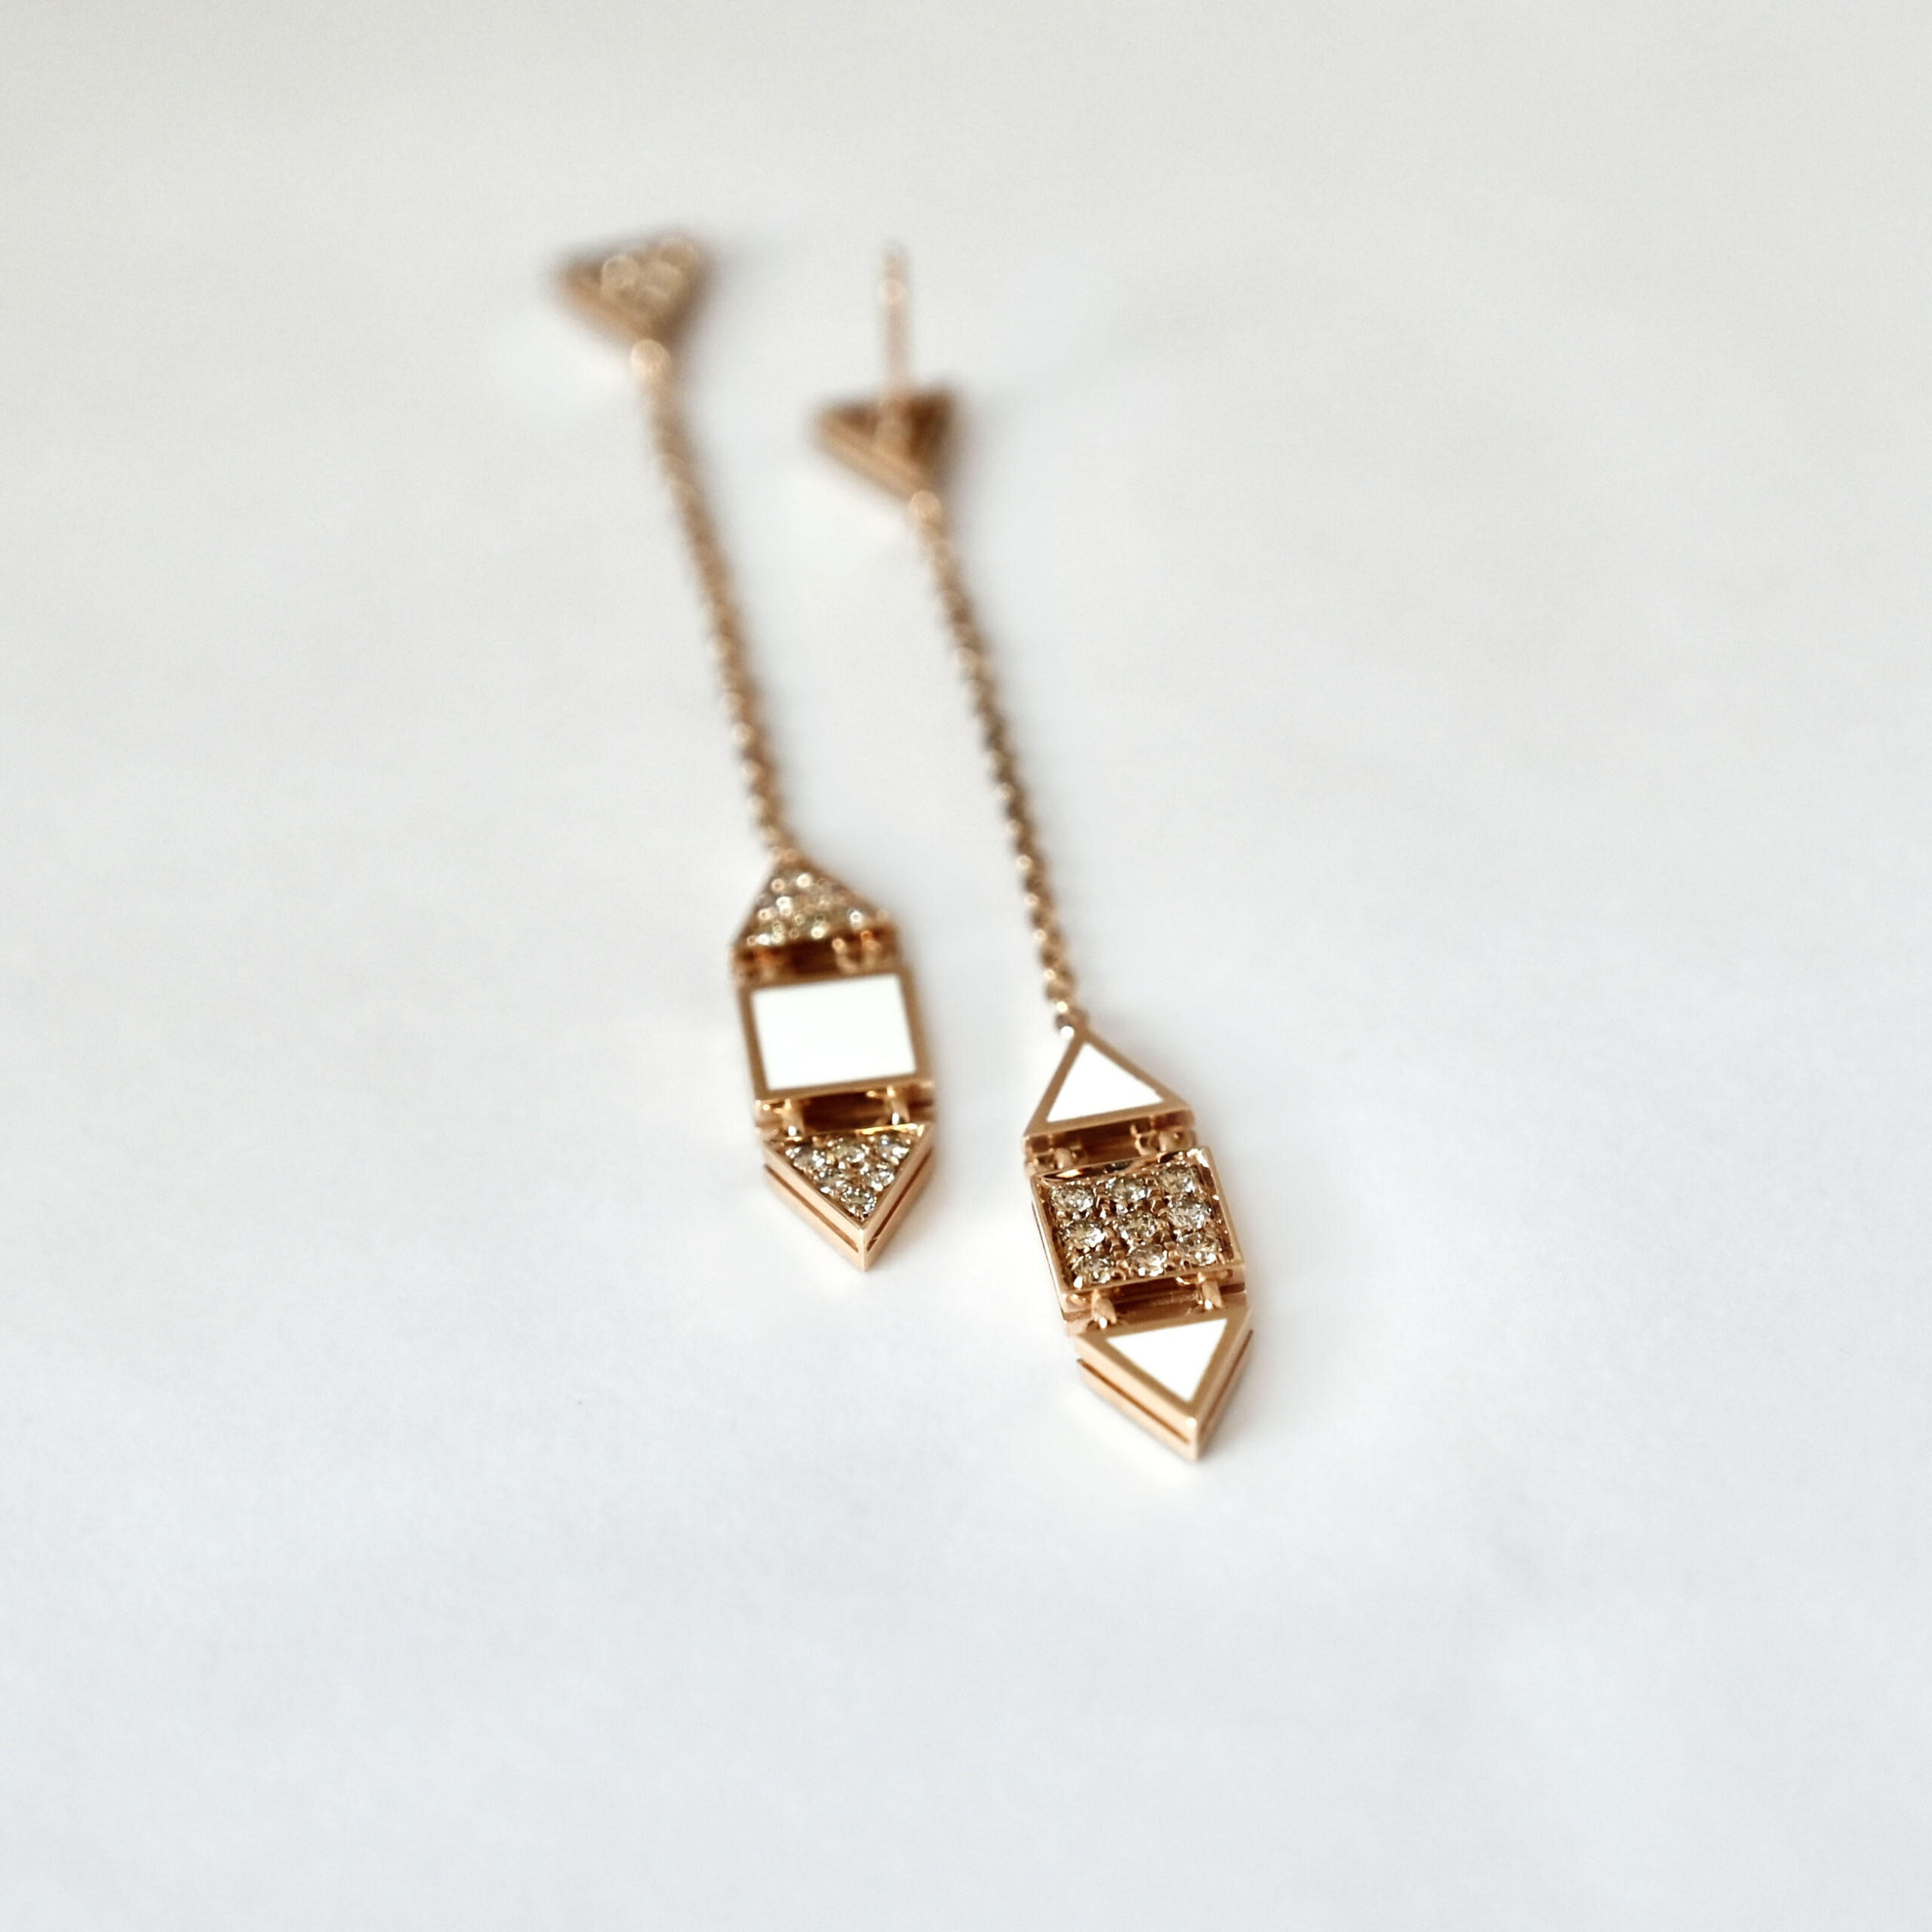 pendent-earrings-cristalllo-hermitage-sahara (2)